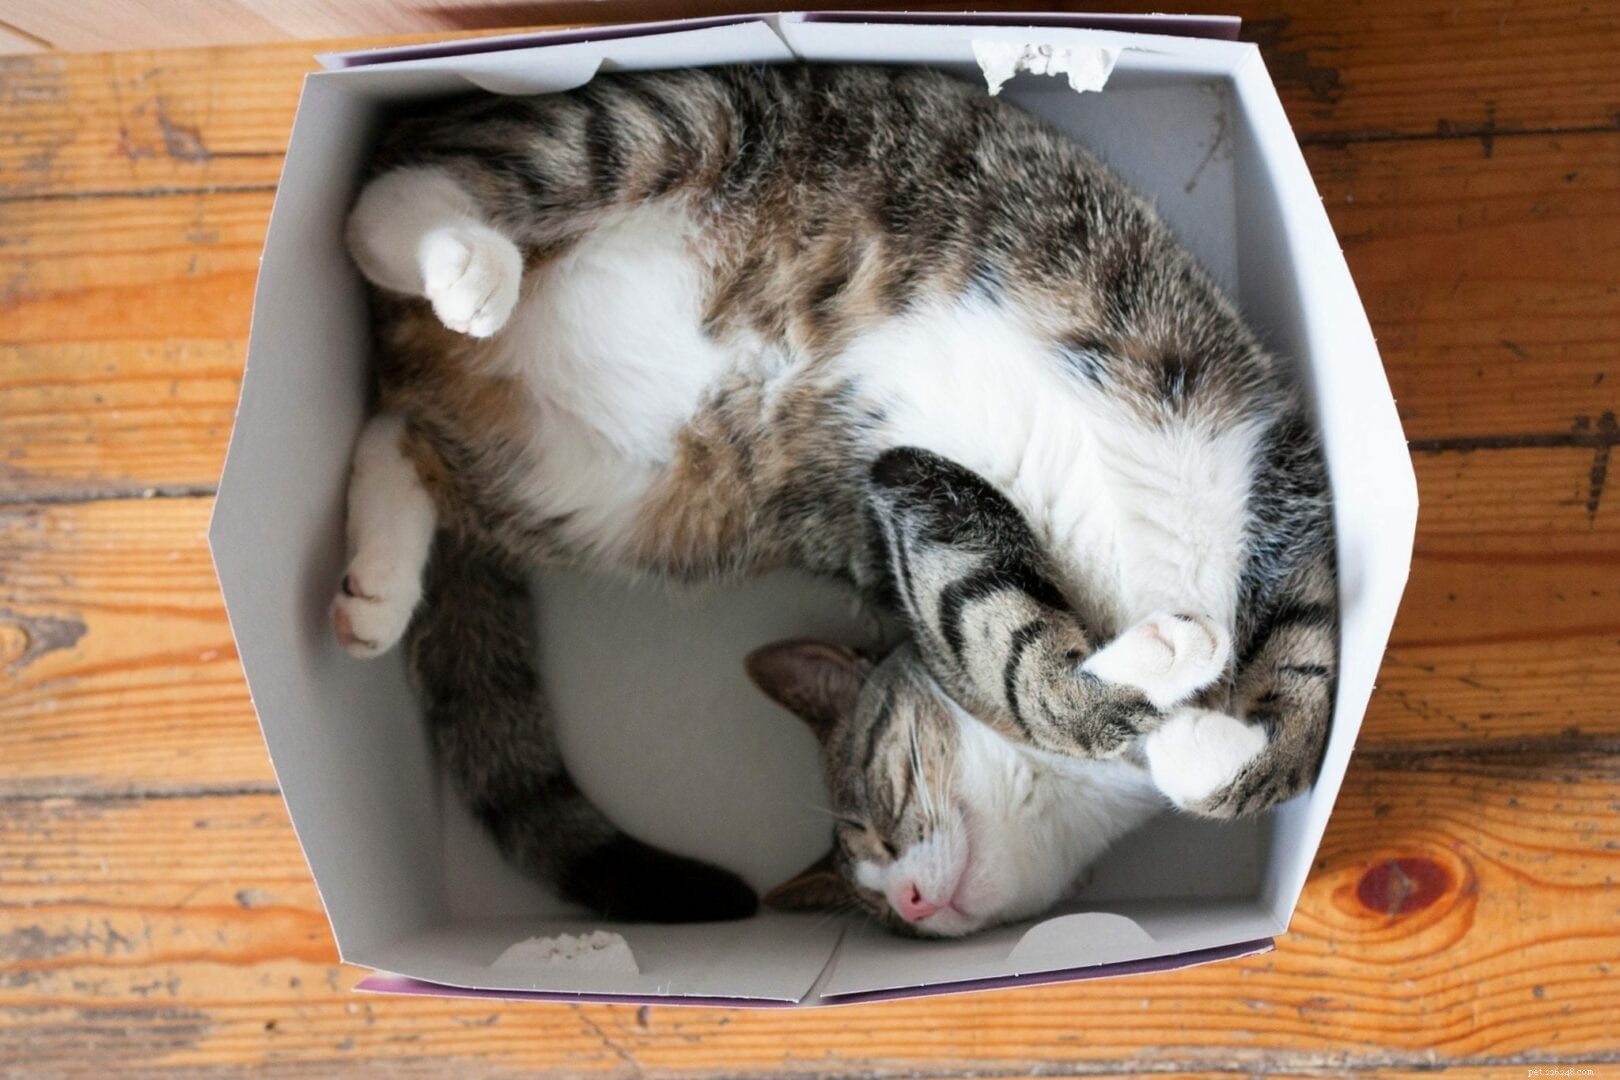 Hoe kunnen katten zo goed knijpen in krappe ruimtes?